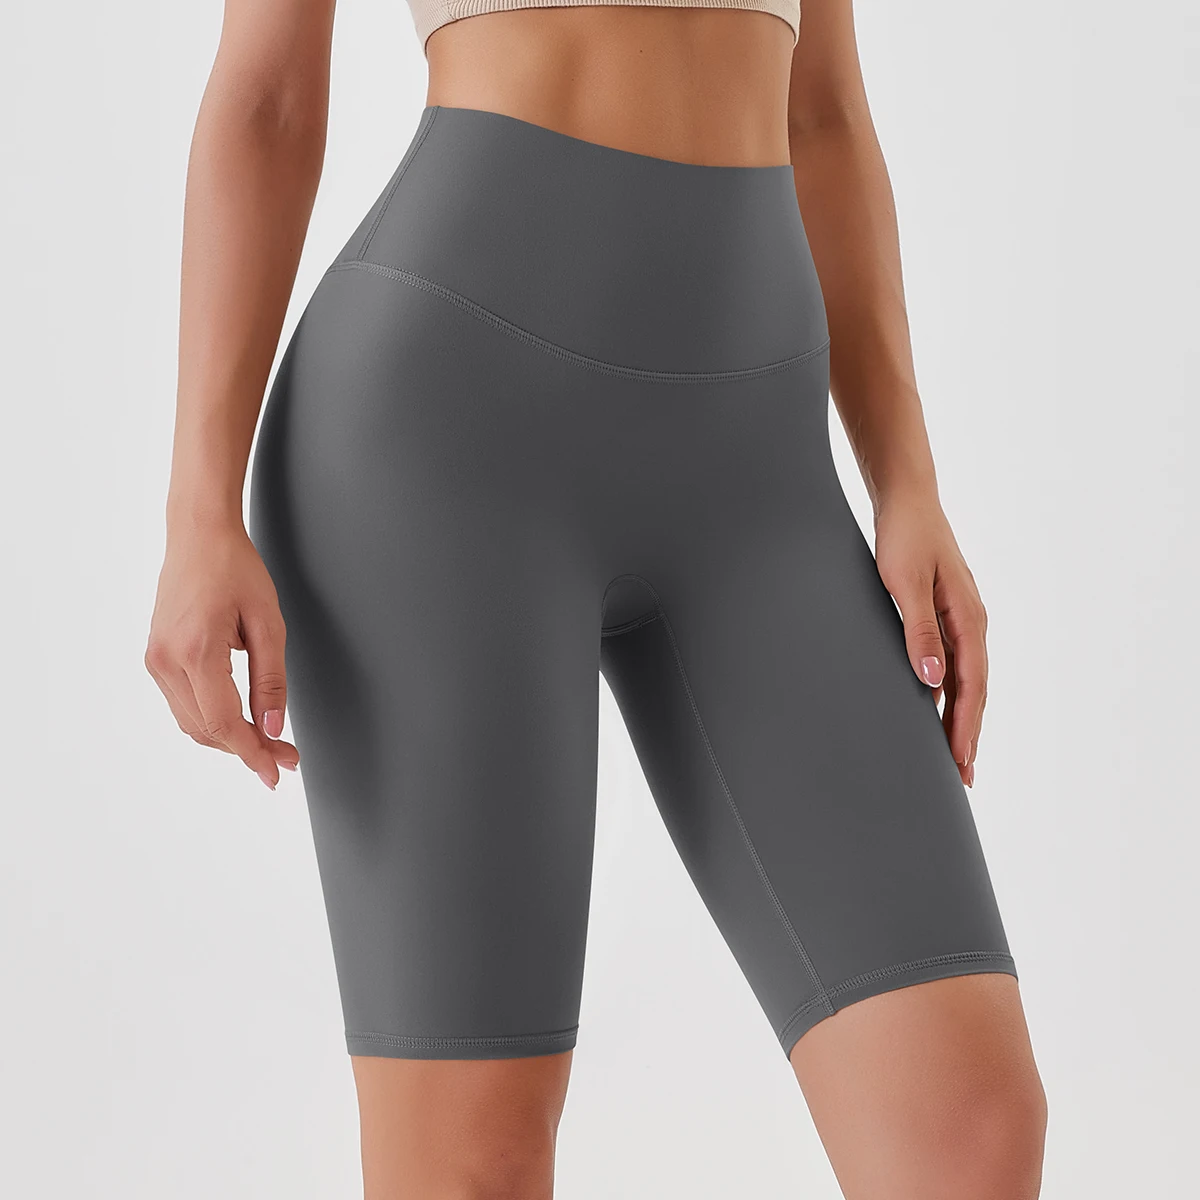 Women Sports Short Yoga Shorts High Waist Breathable Soft Fitness Tight Women Yoga Legging Shorts Cycling Athletic Gym Shorts